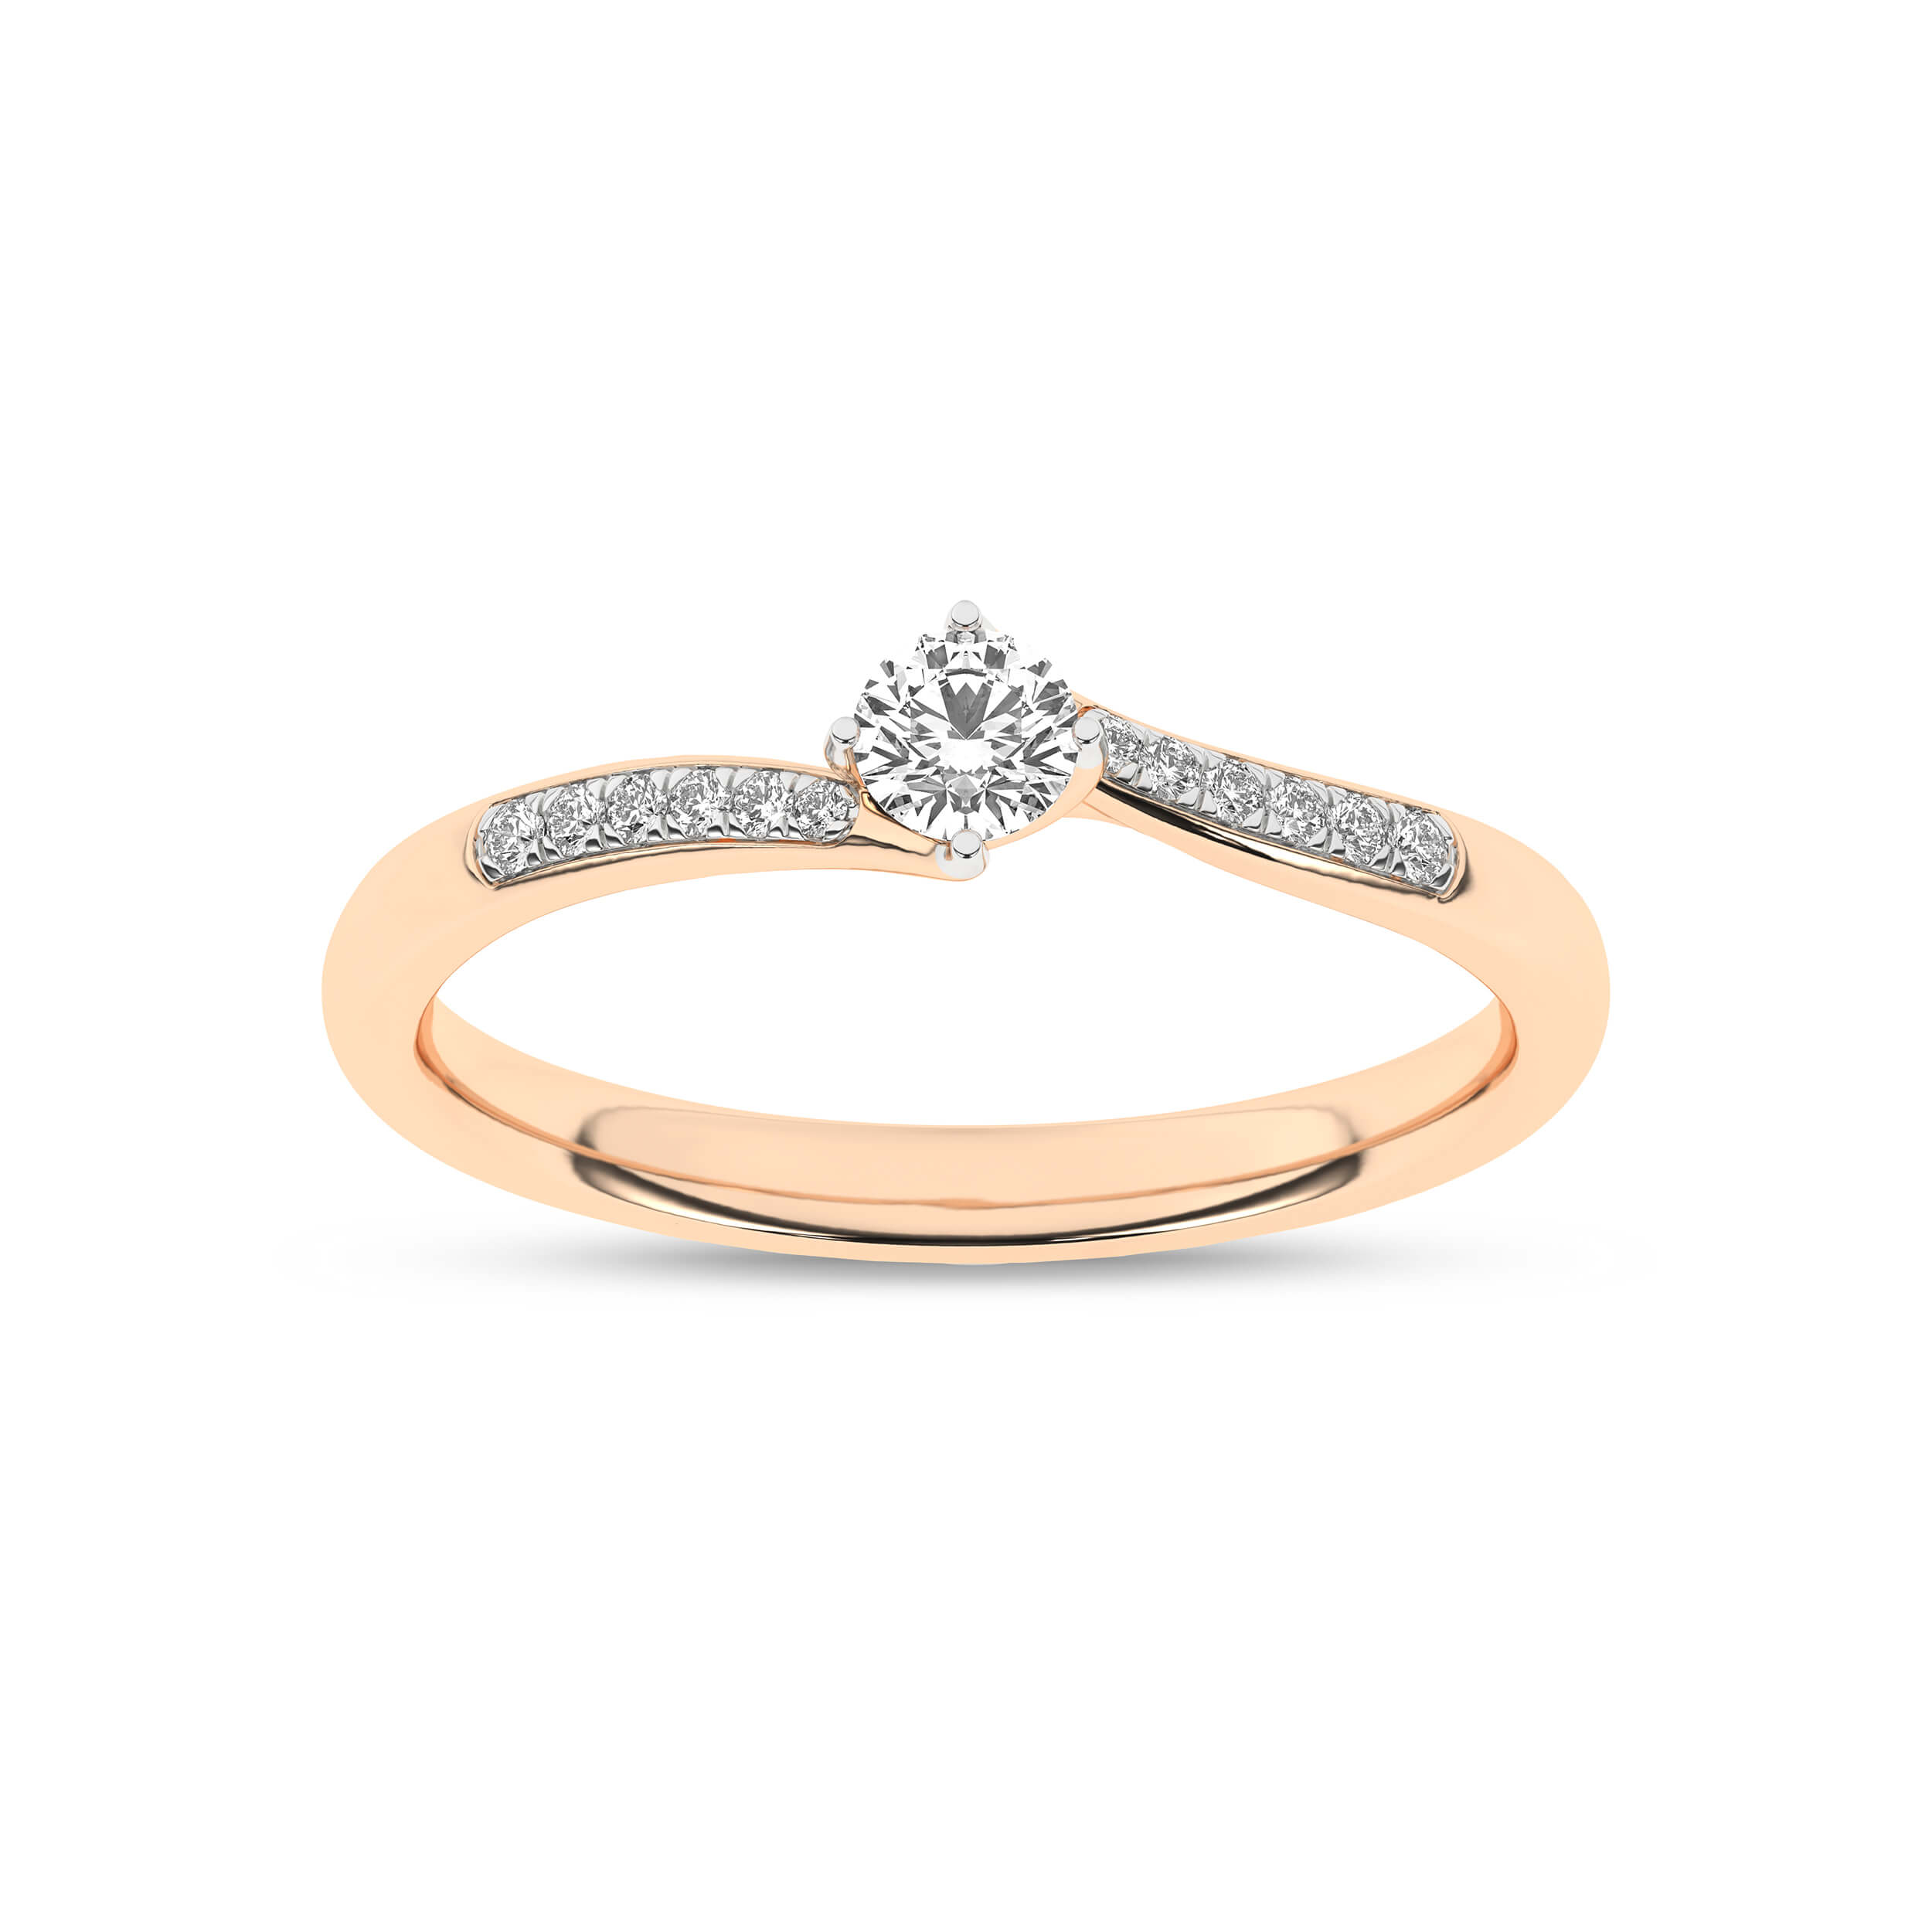 Inel de logodna din Aur Roz 14K cu Diamante 0.18Ct, articol RB16847EG, previzualizare foto 1